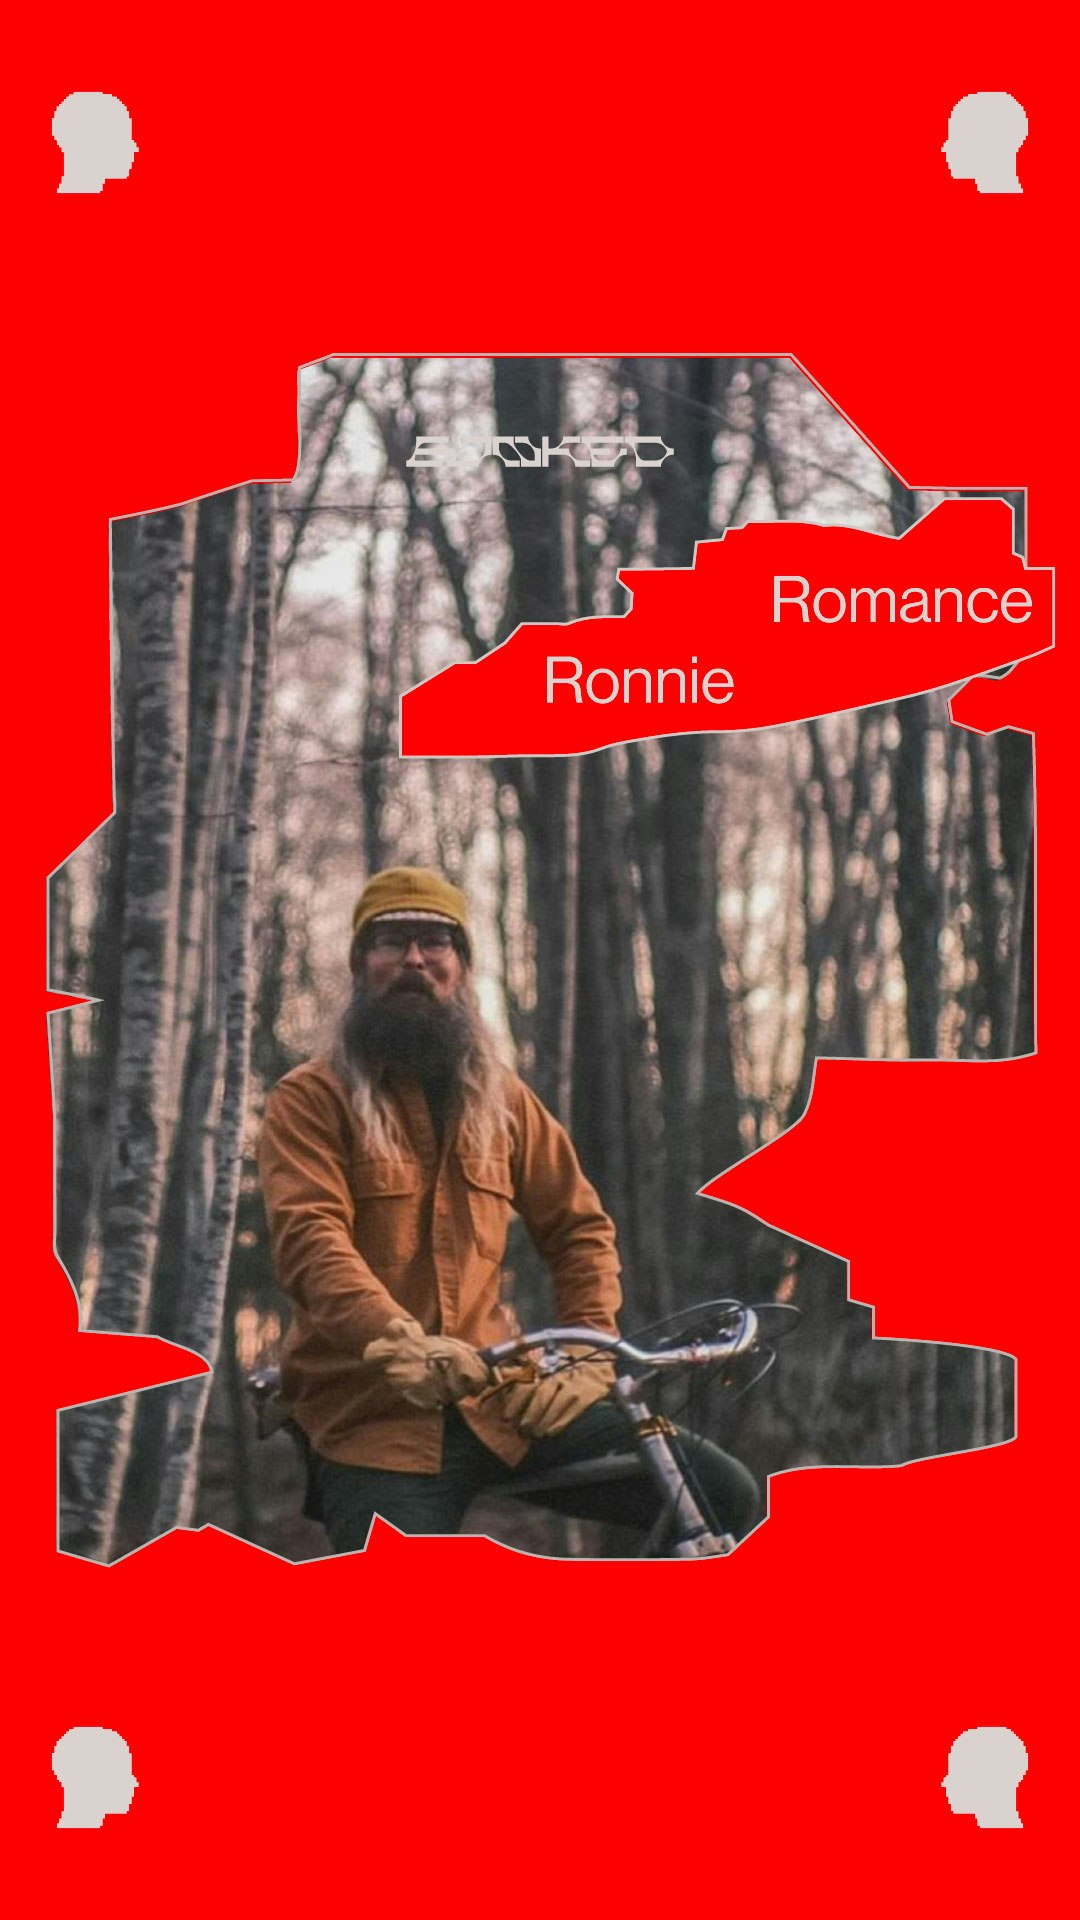 Ronnie Romance